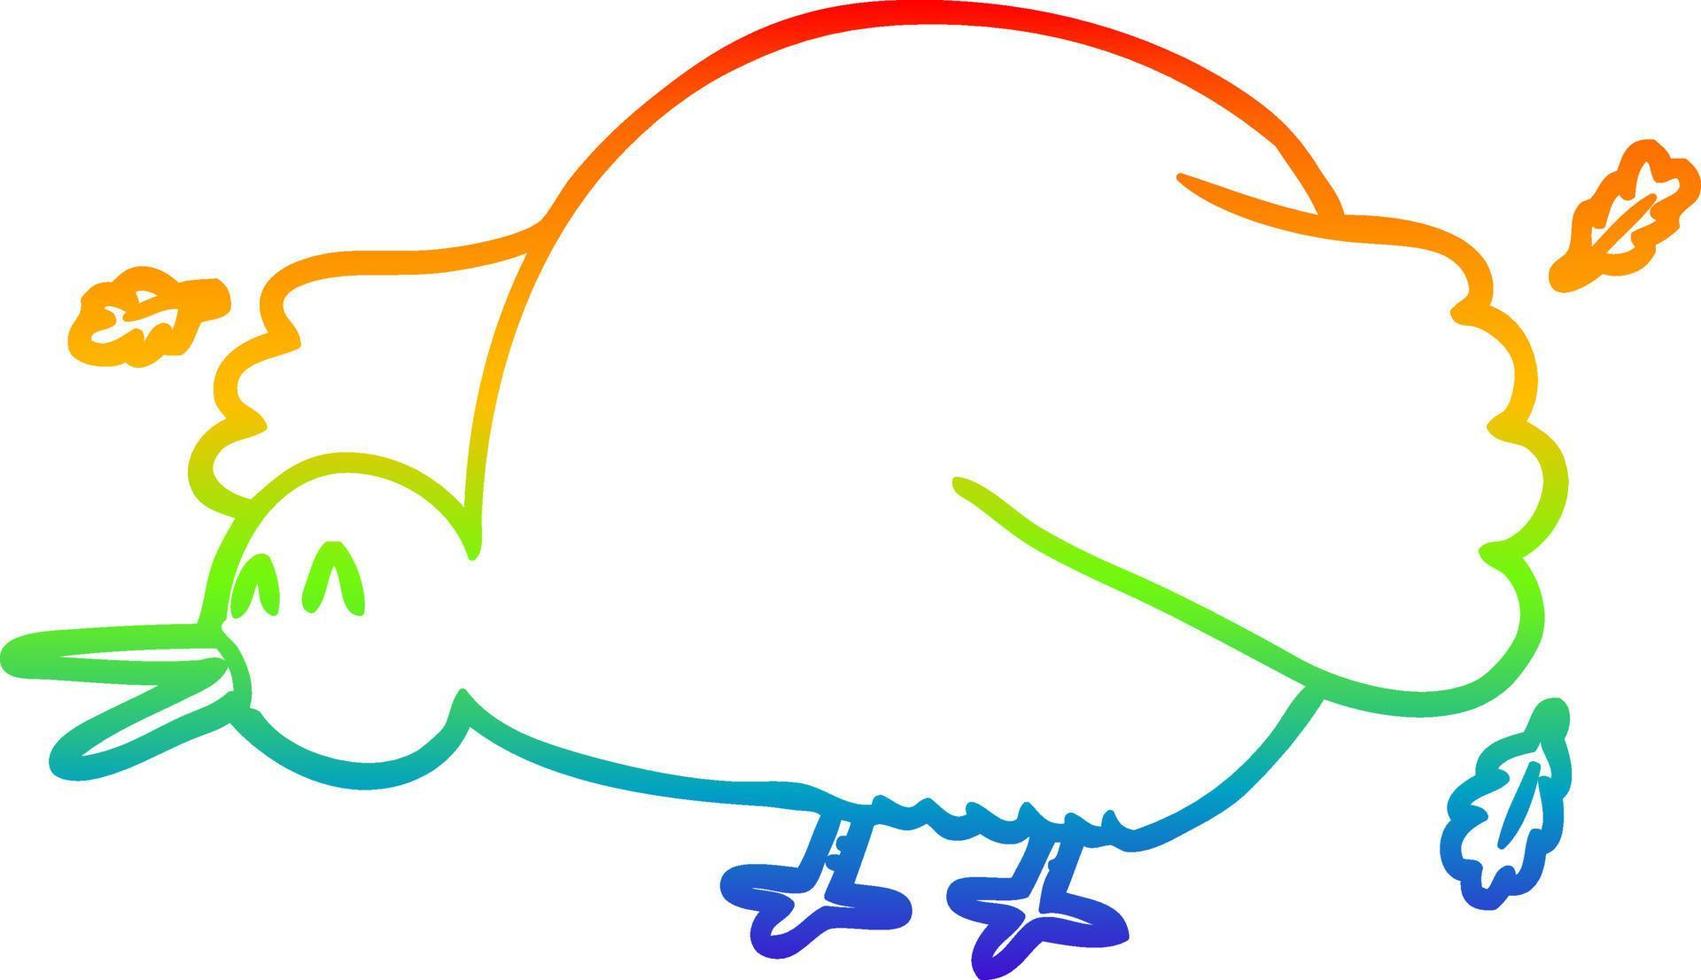 dibujo de línea de gradiente de arco iris pájaro kiwi de dibujos animados aleteo de alas vector